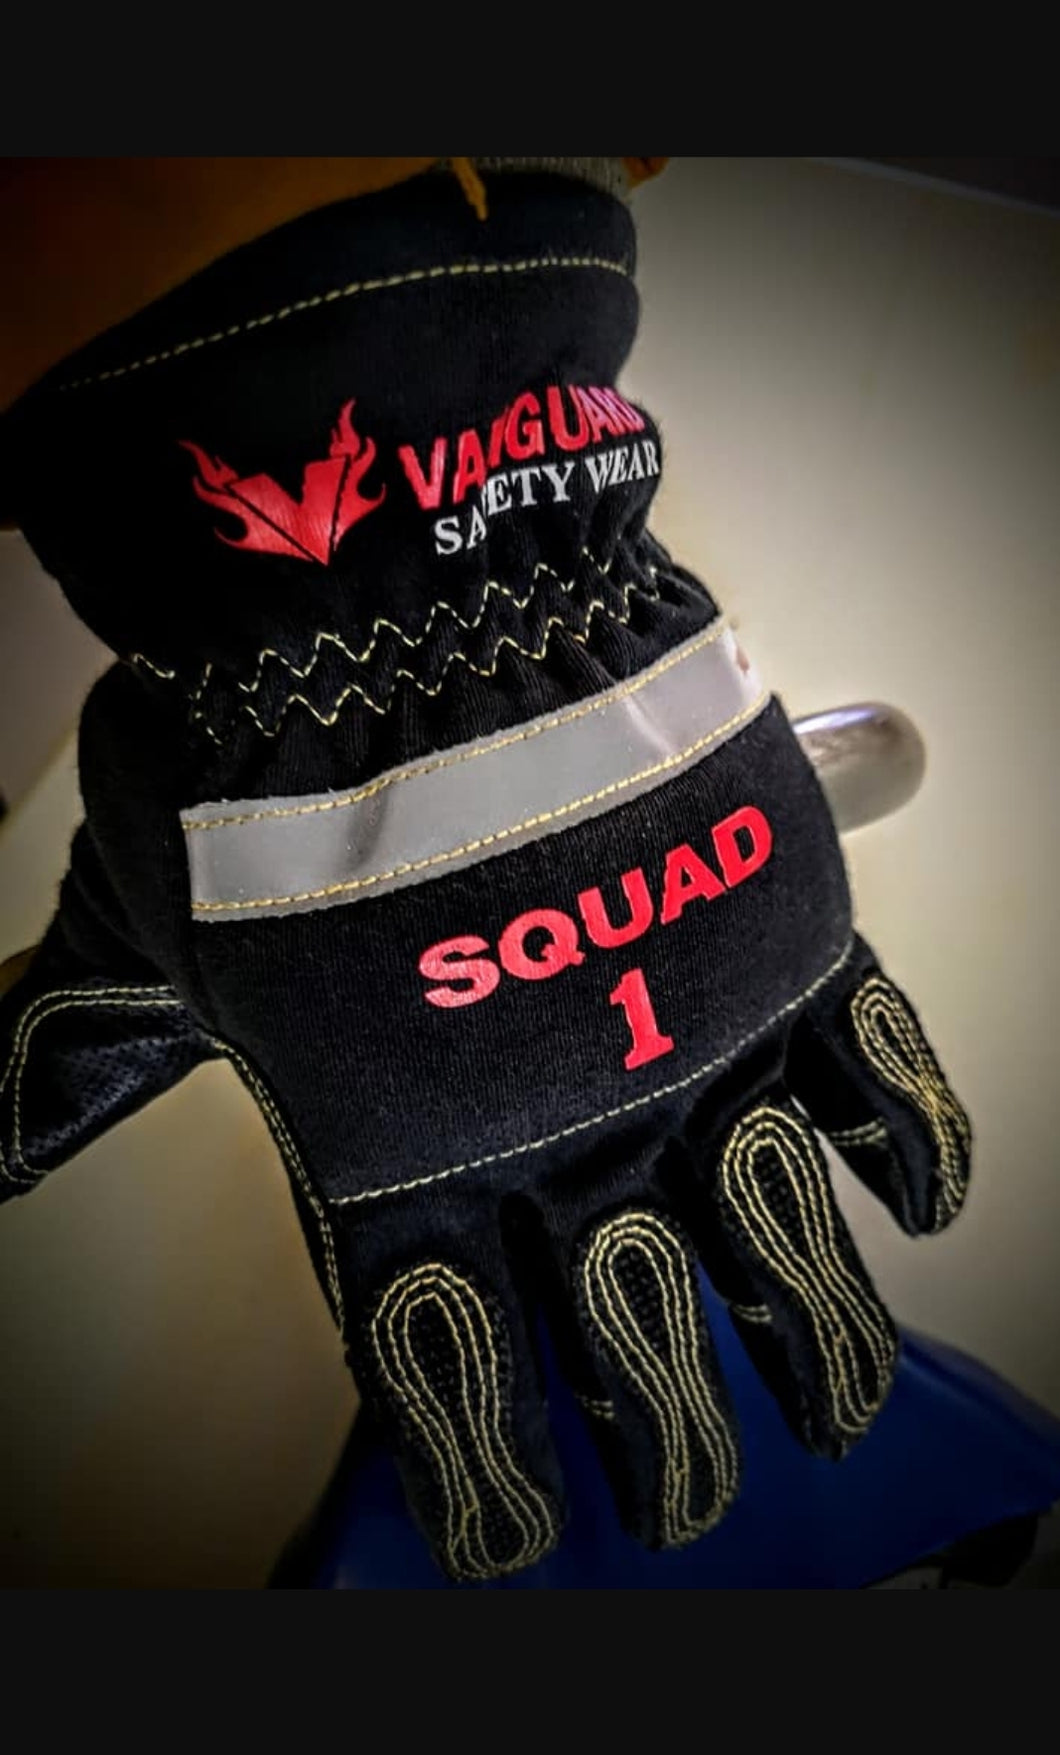 Vanguard, Squad-1 Extrication gloves